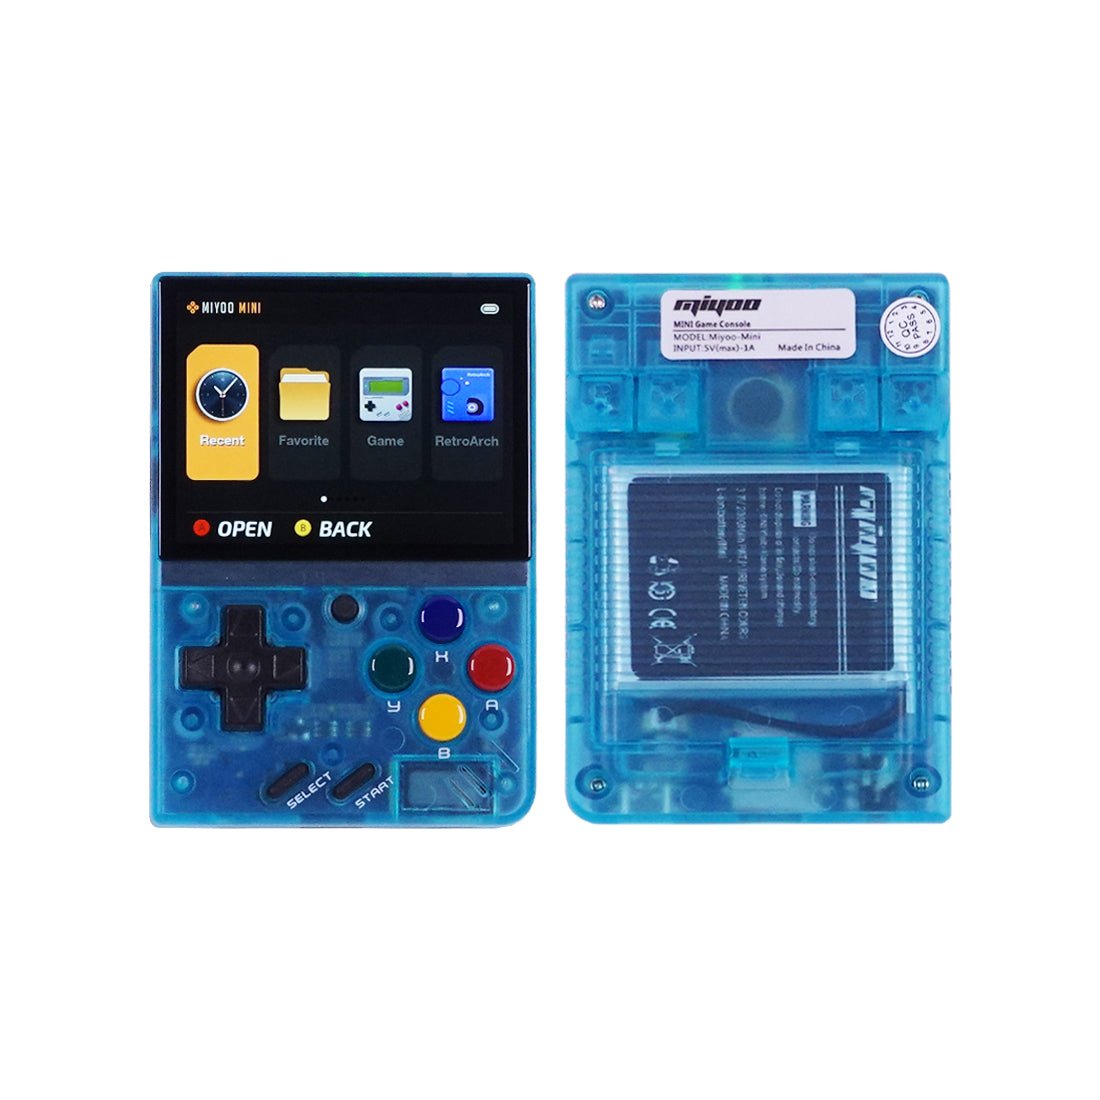 Miyoo mini - Transparent Blue(64GB)